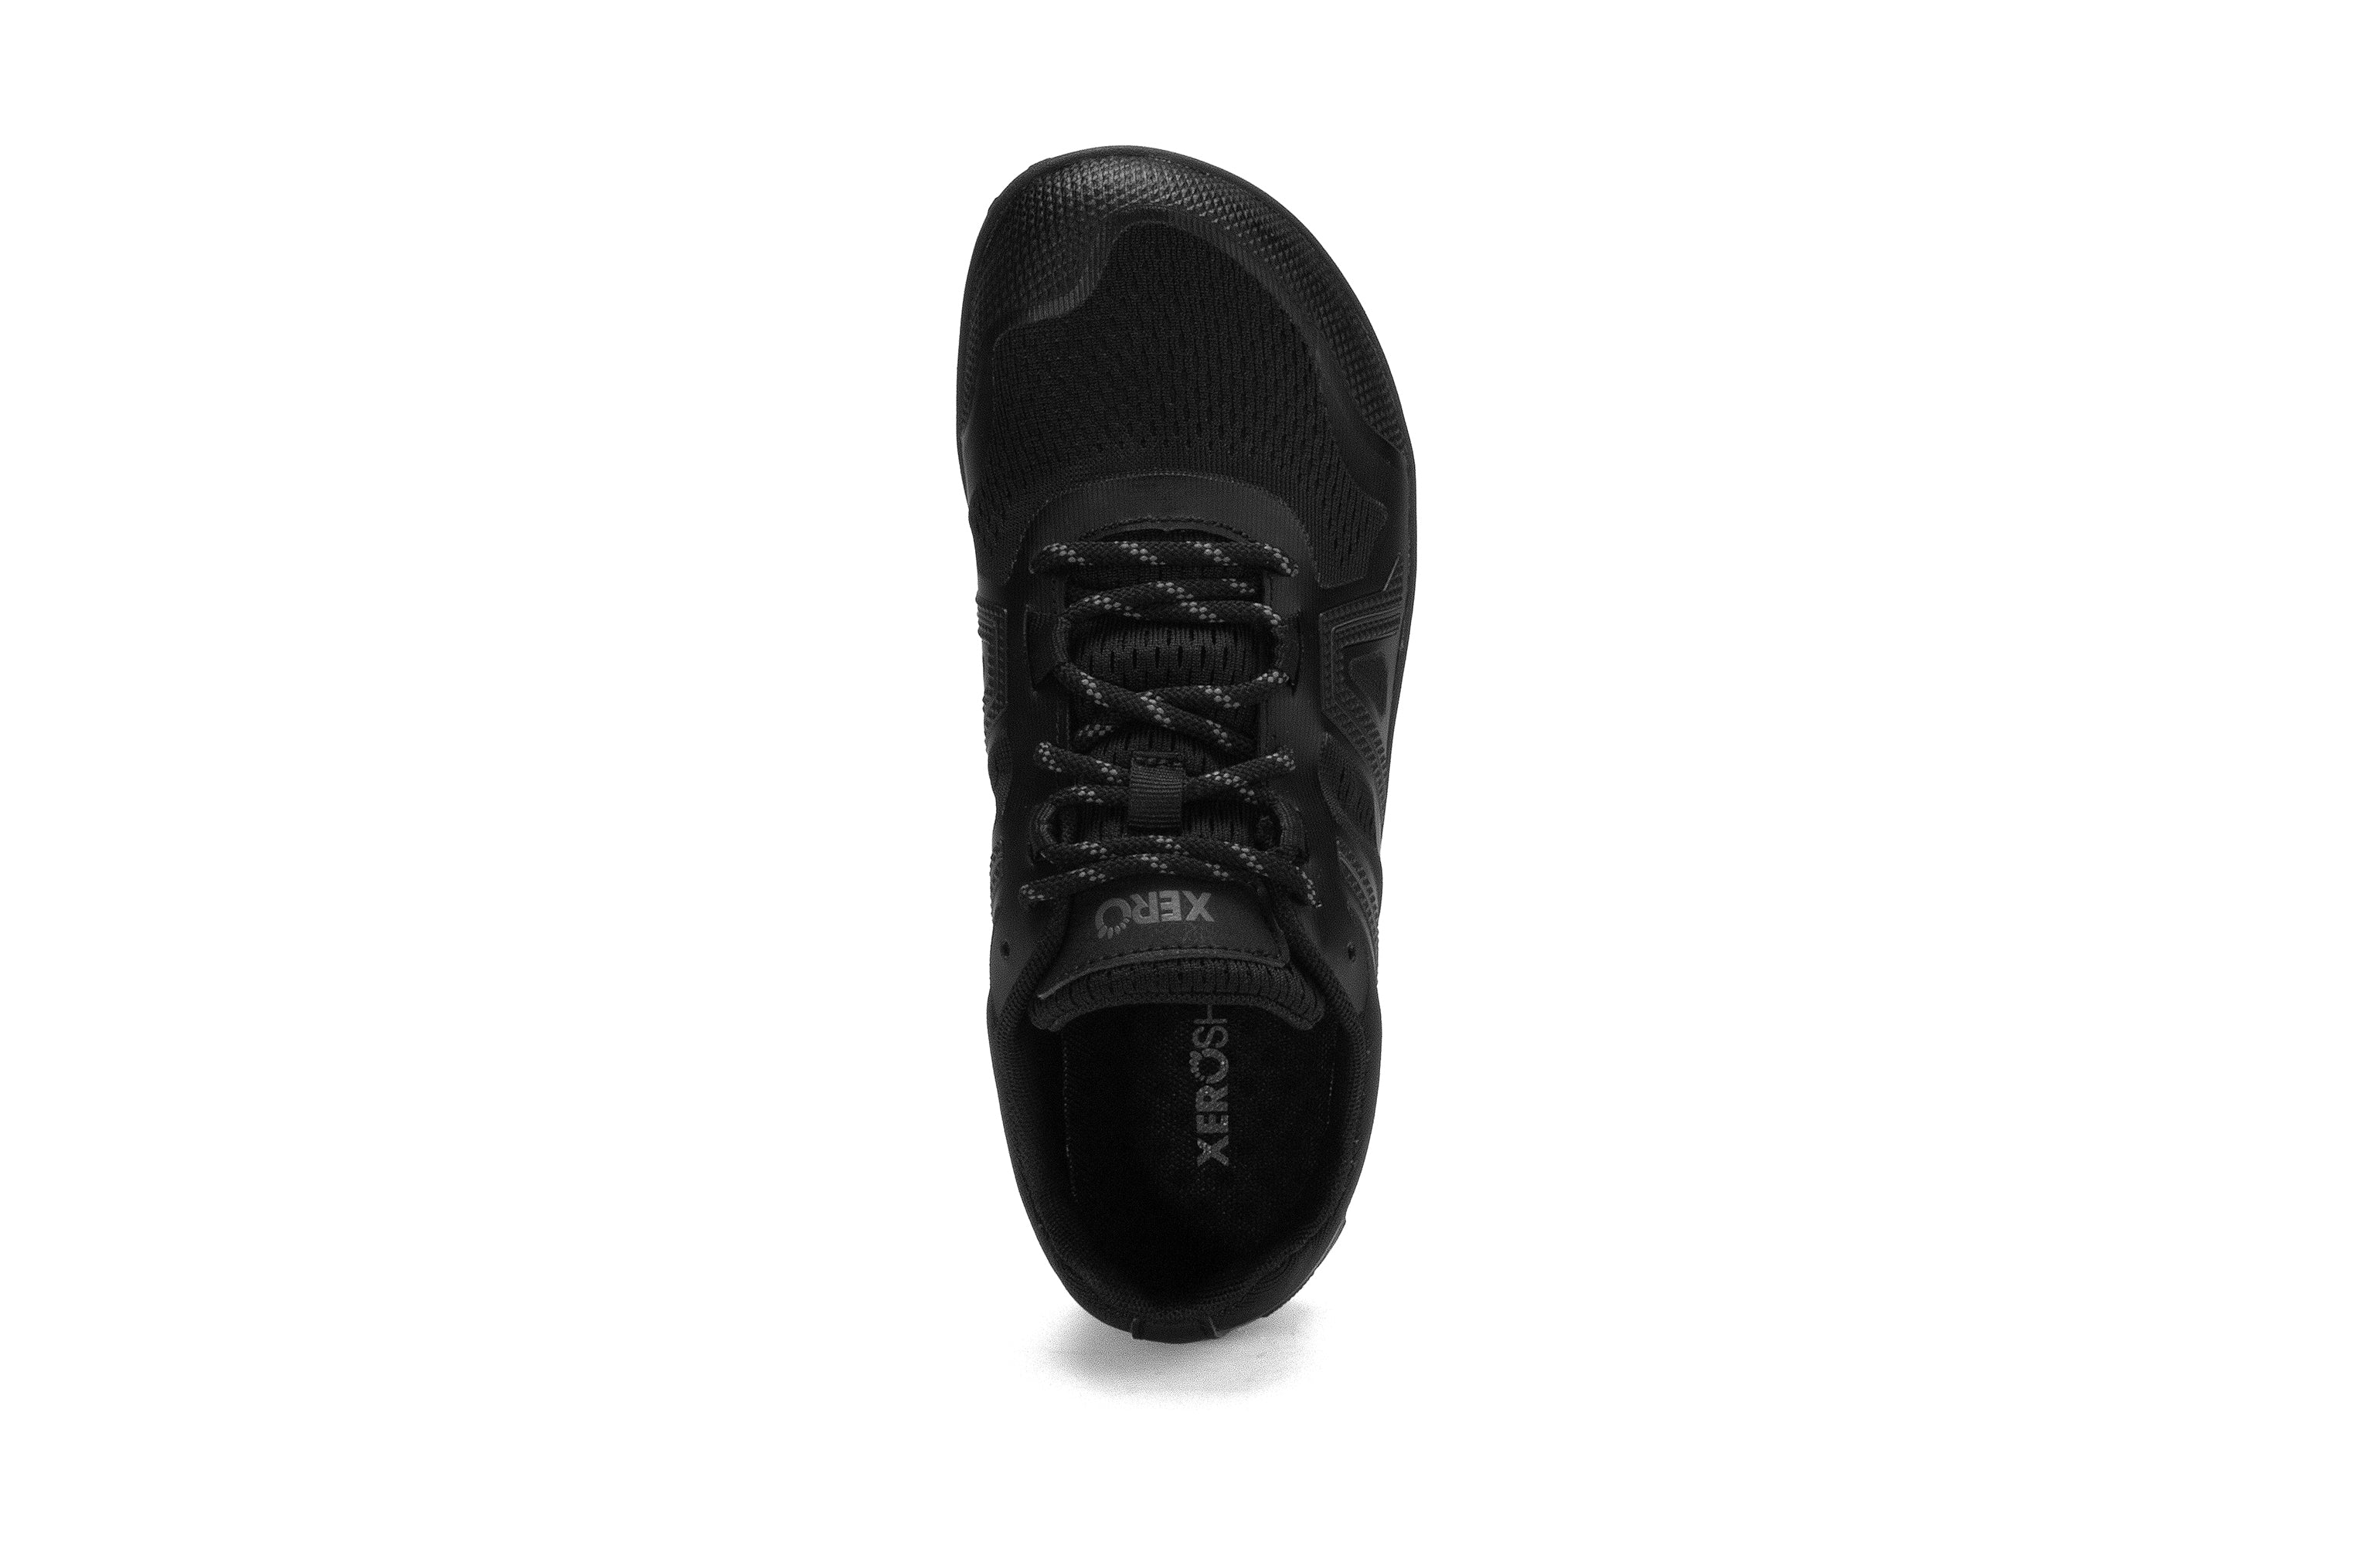 Xero Shoes Mesa Trail barfods trailsko til kvinder i farven black, top